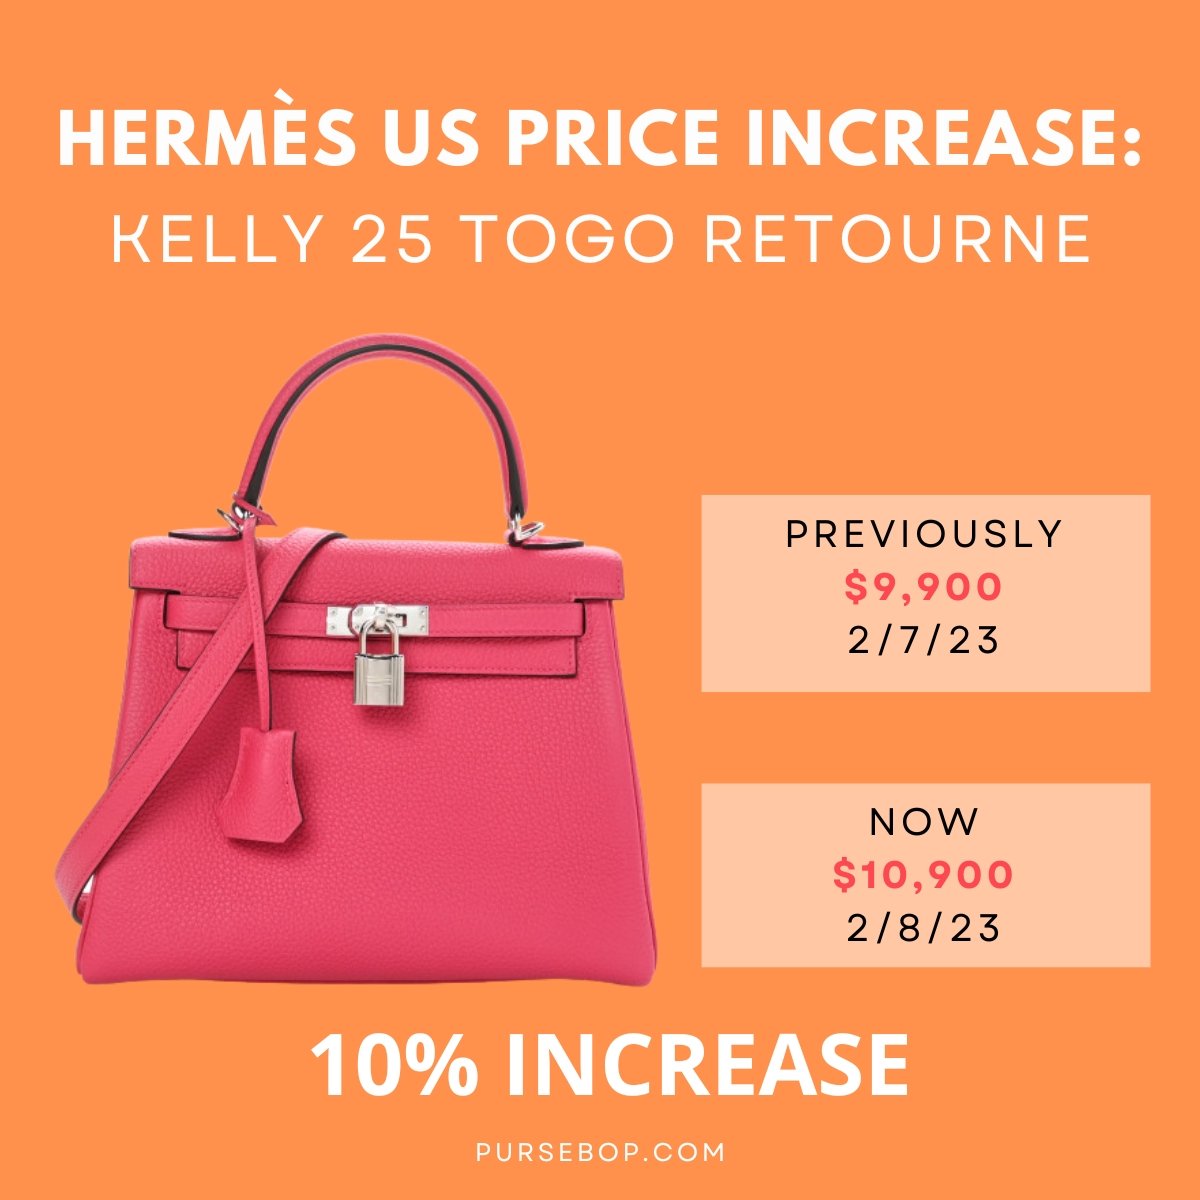 New Hermès Prices 2023